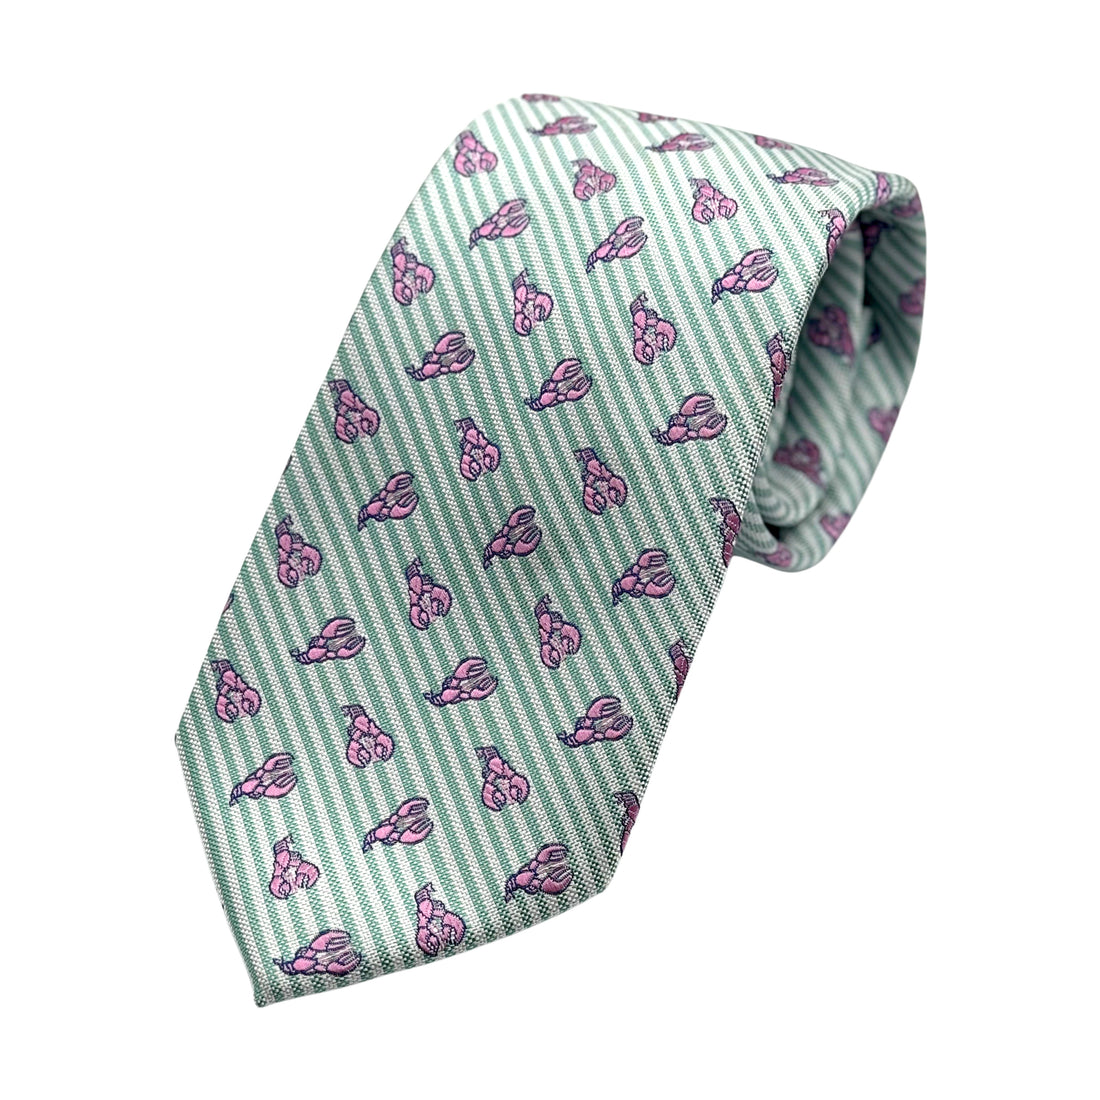 James Adelin Mens Luxury Microfibre Neck Tie in Textured Striped Diagonal Weave Crabs Motif Design